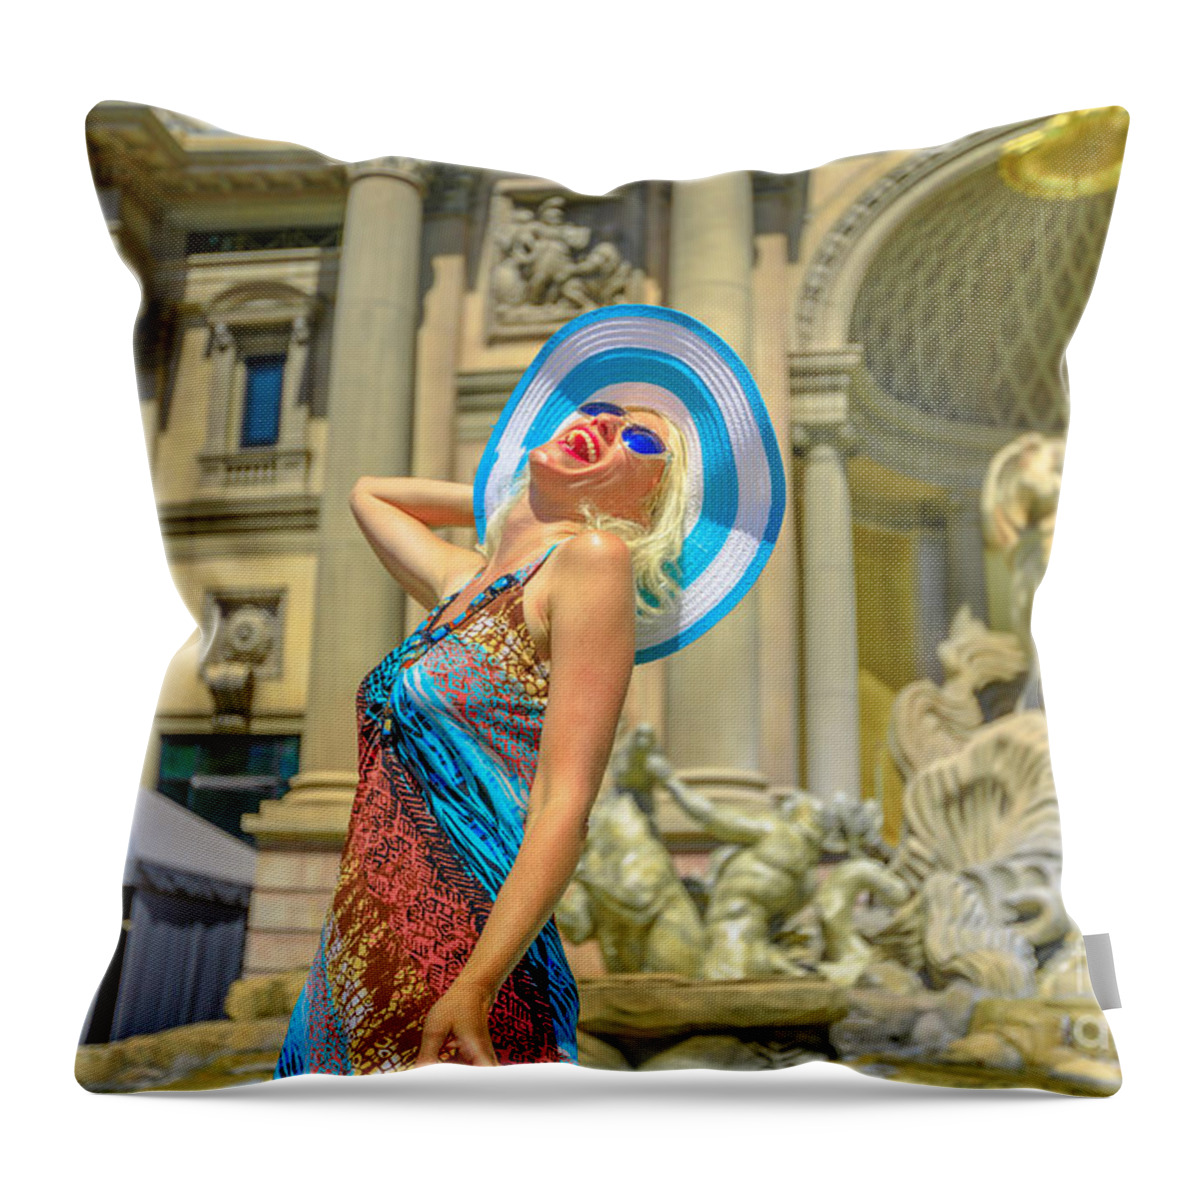 Las Vegas Throw Pillow featuring the photograph Las vegas woman enjoying #1 by Benny Marty